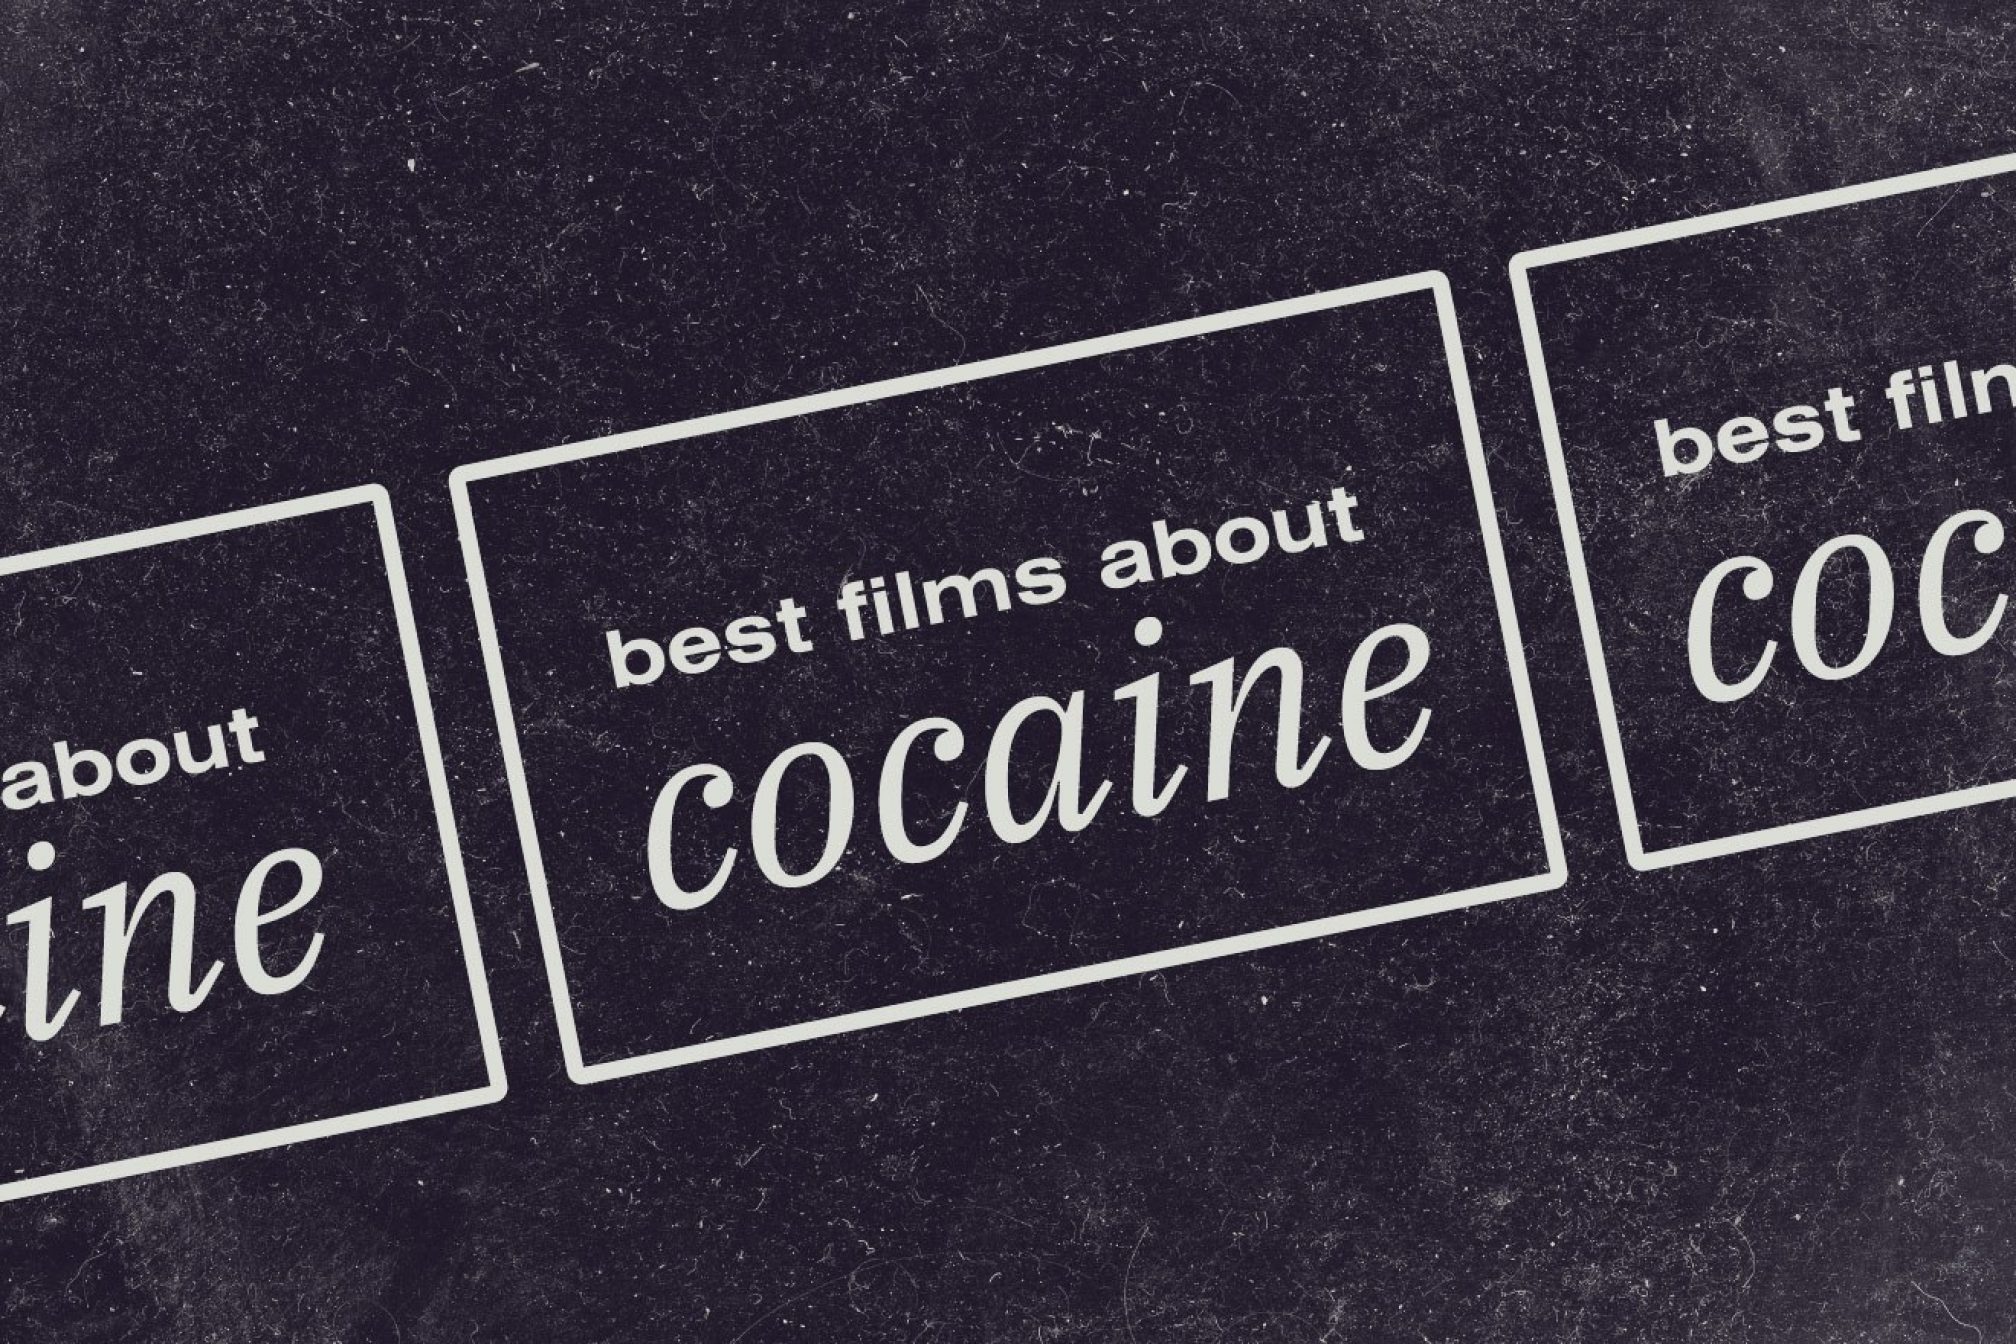 Black Girls Cocaine - The 23 best films about cocaine - Features - Mixmag